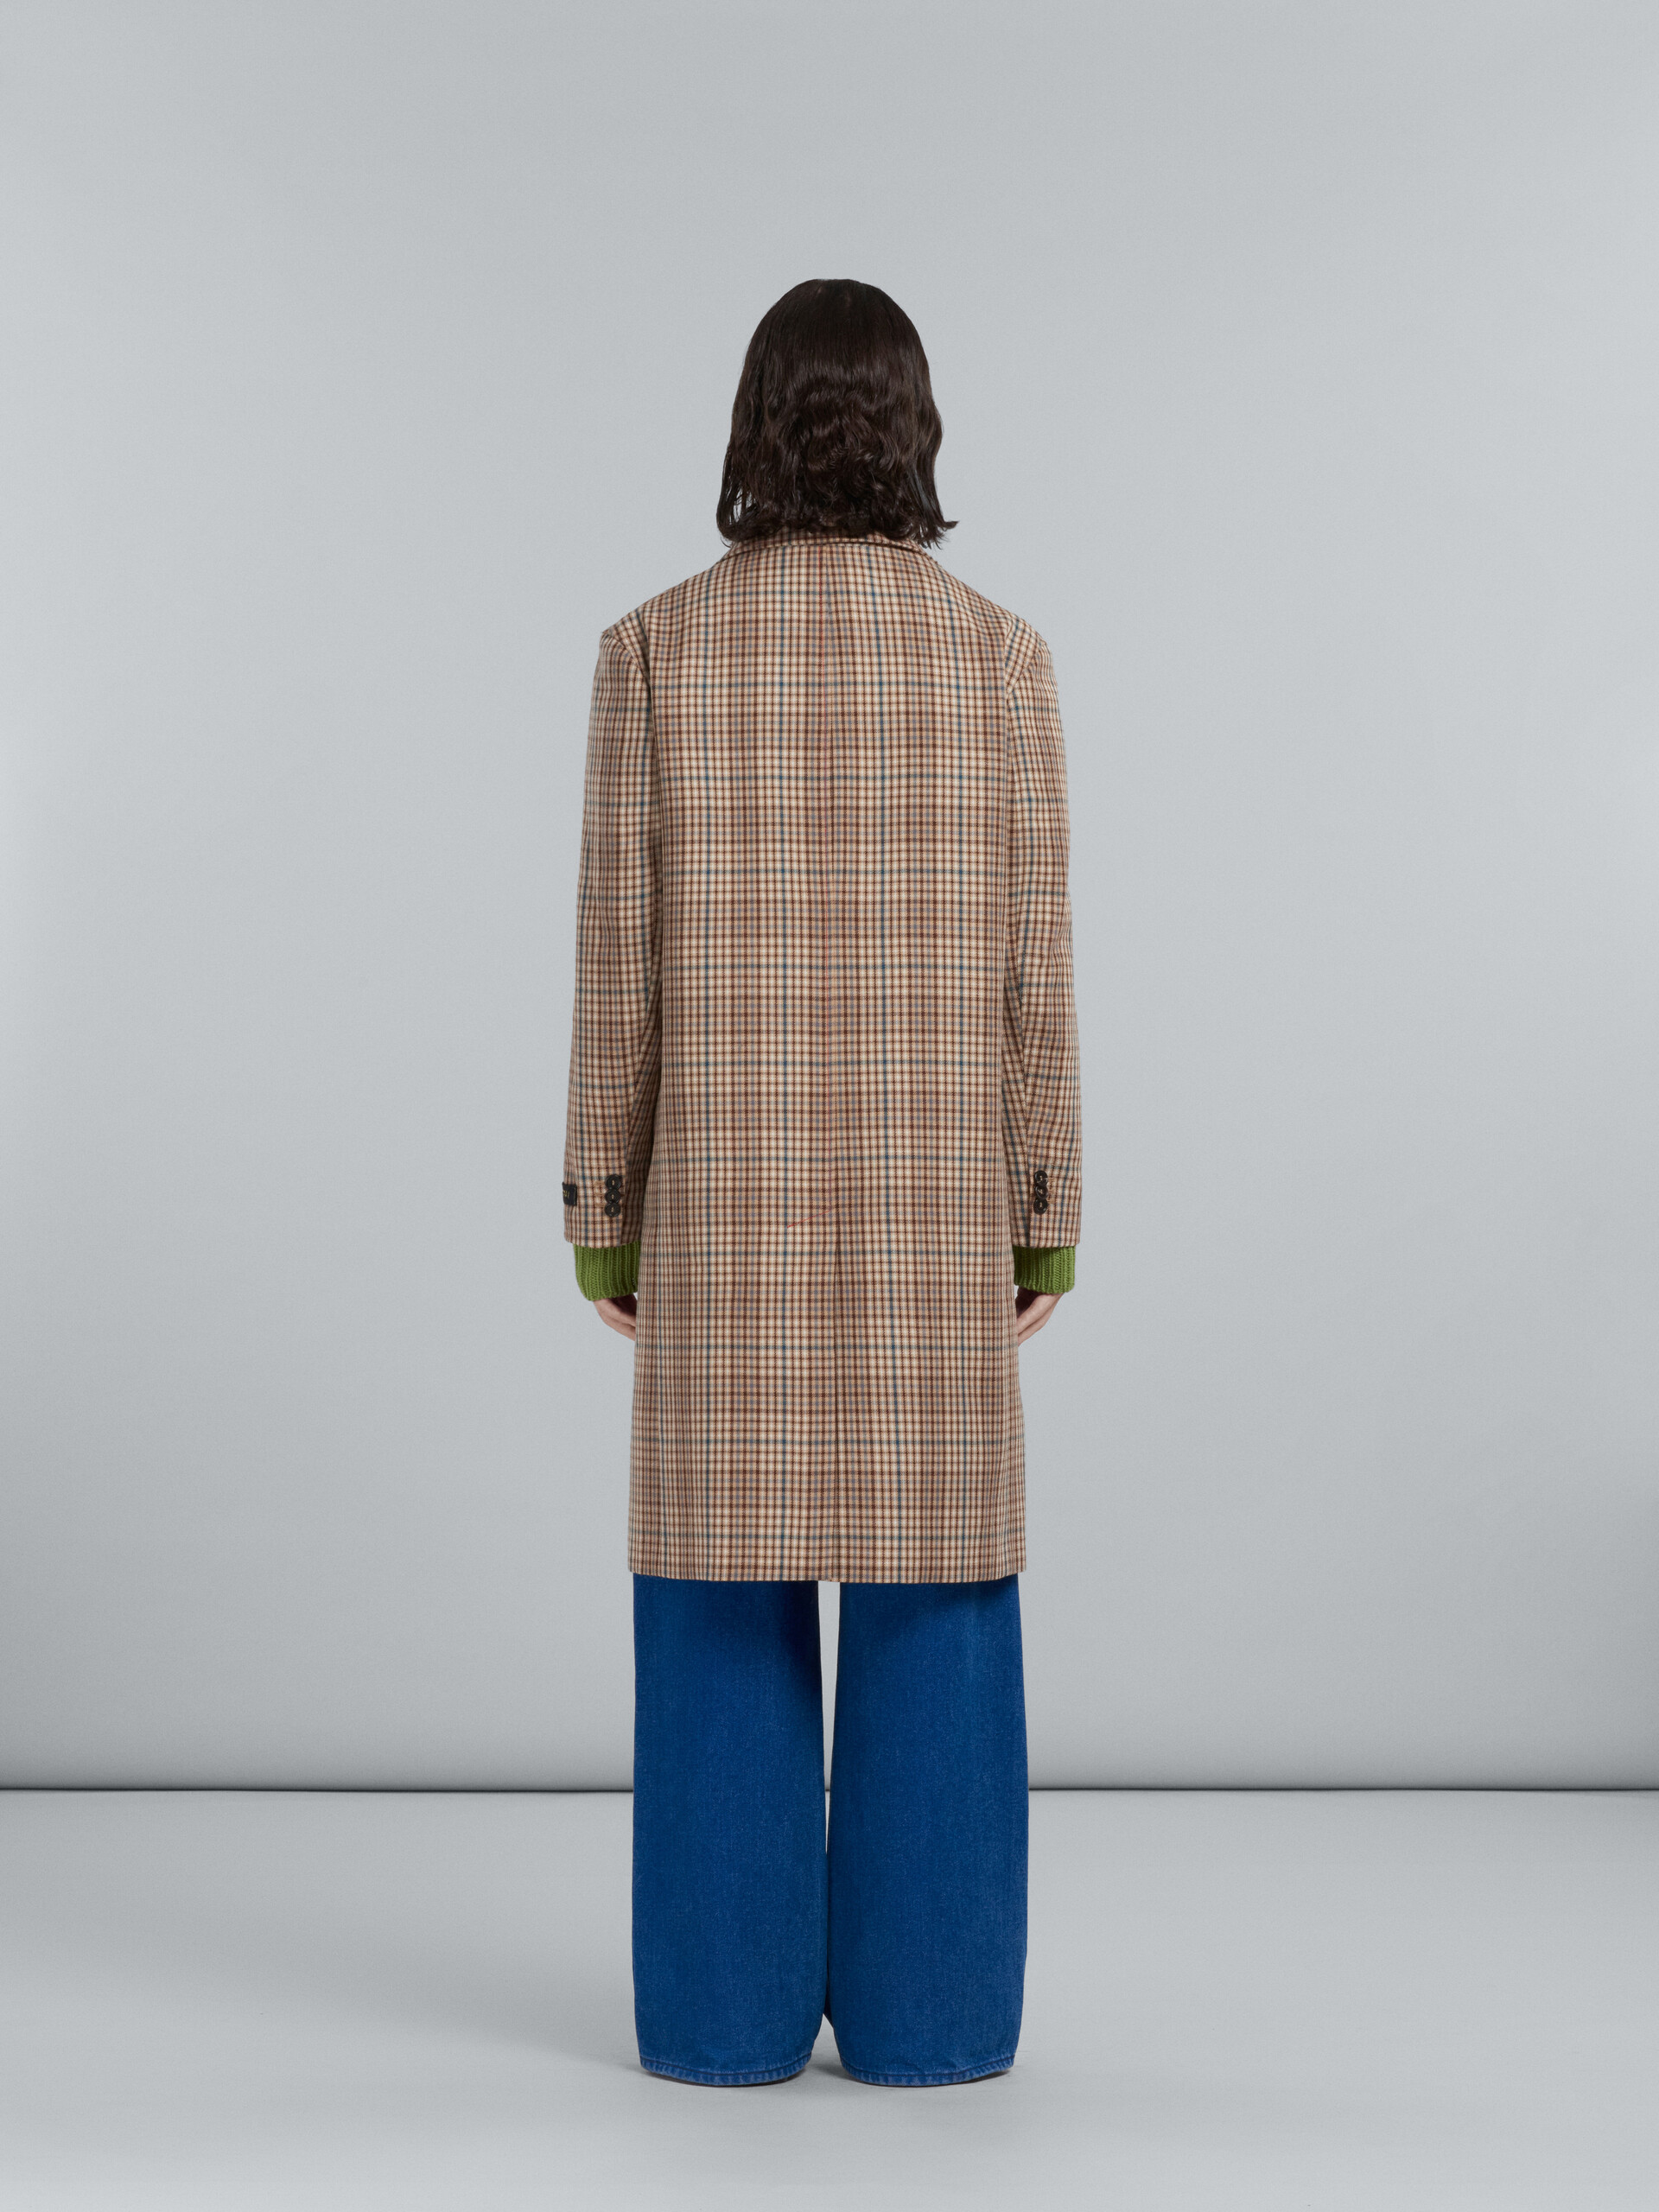 Langer Mantel aus beigefarben karierter Wolle - Mäntel - Image 3